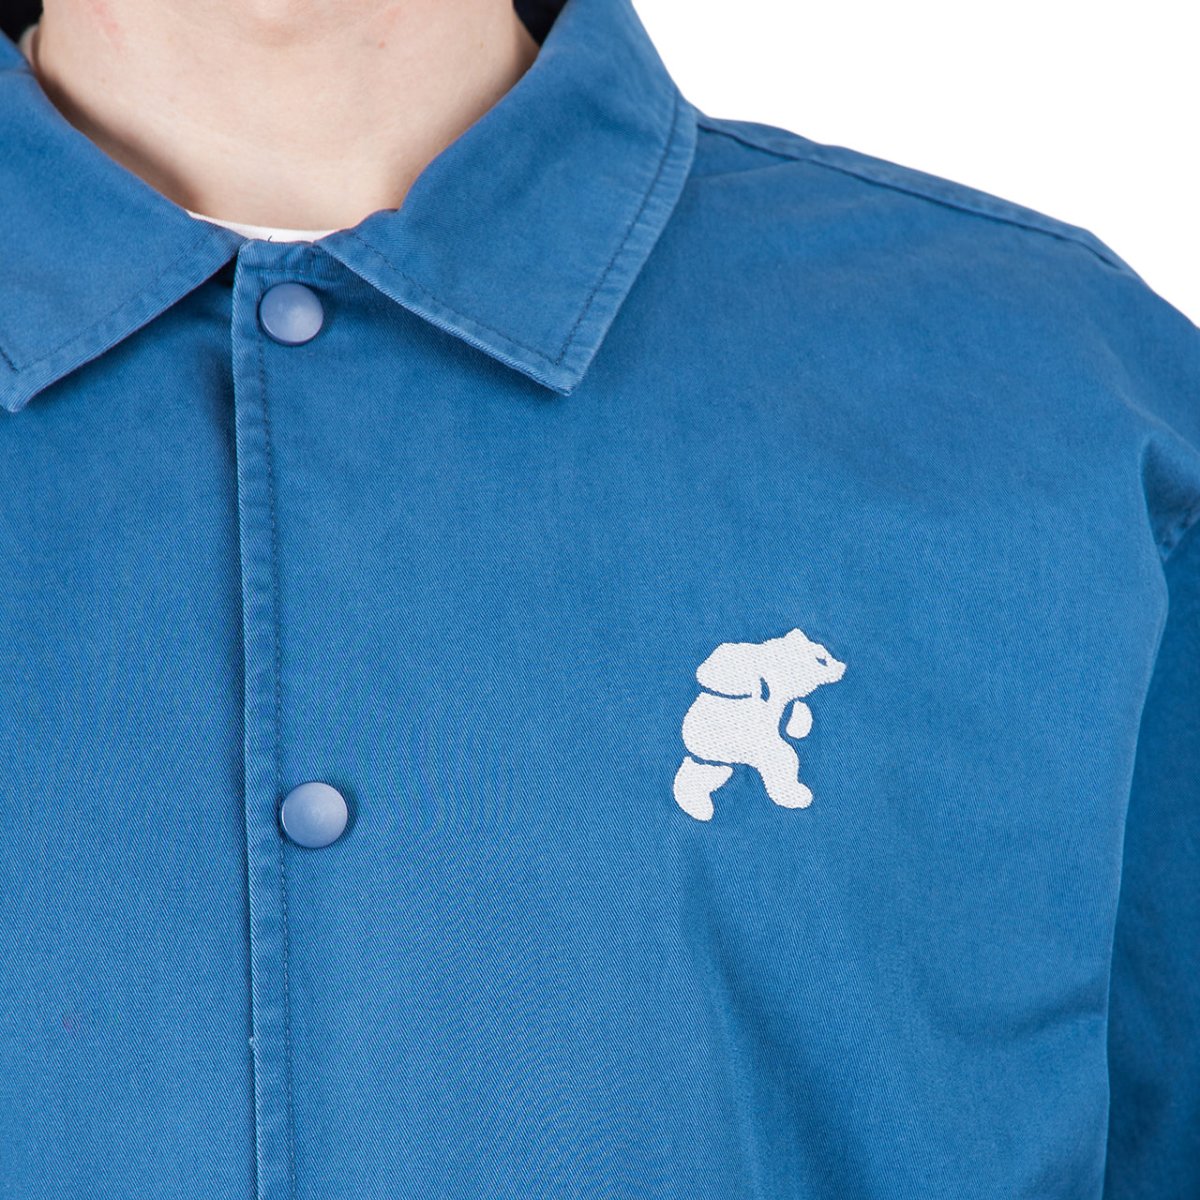 Karhu Trampas Jacket (Blau)  - Allike Store